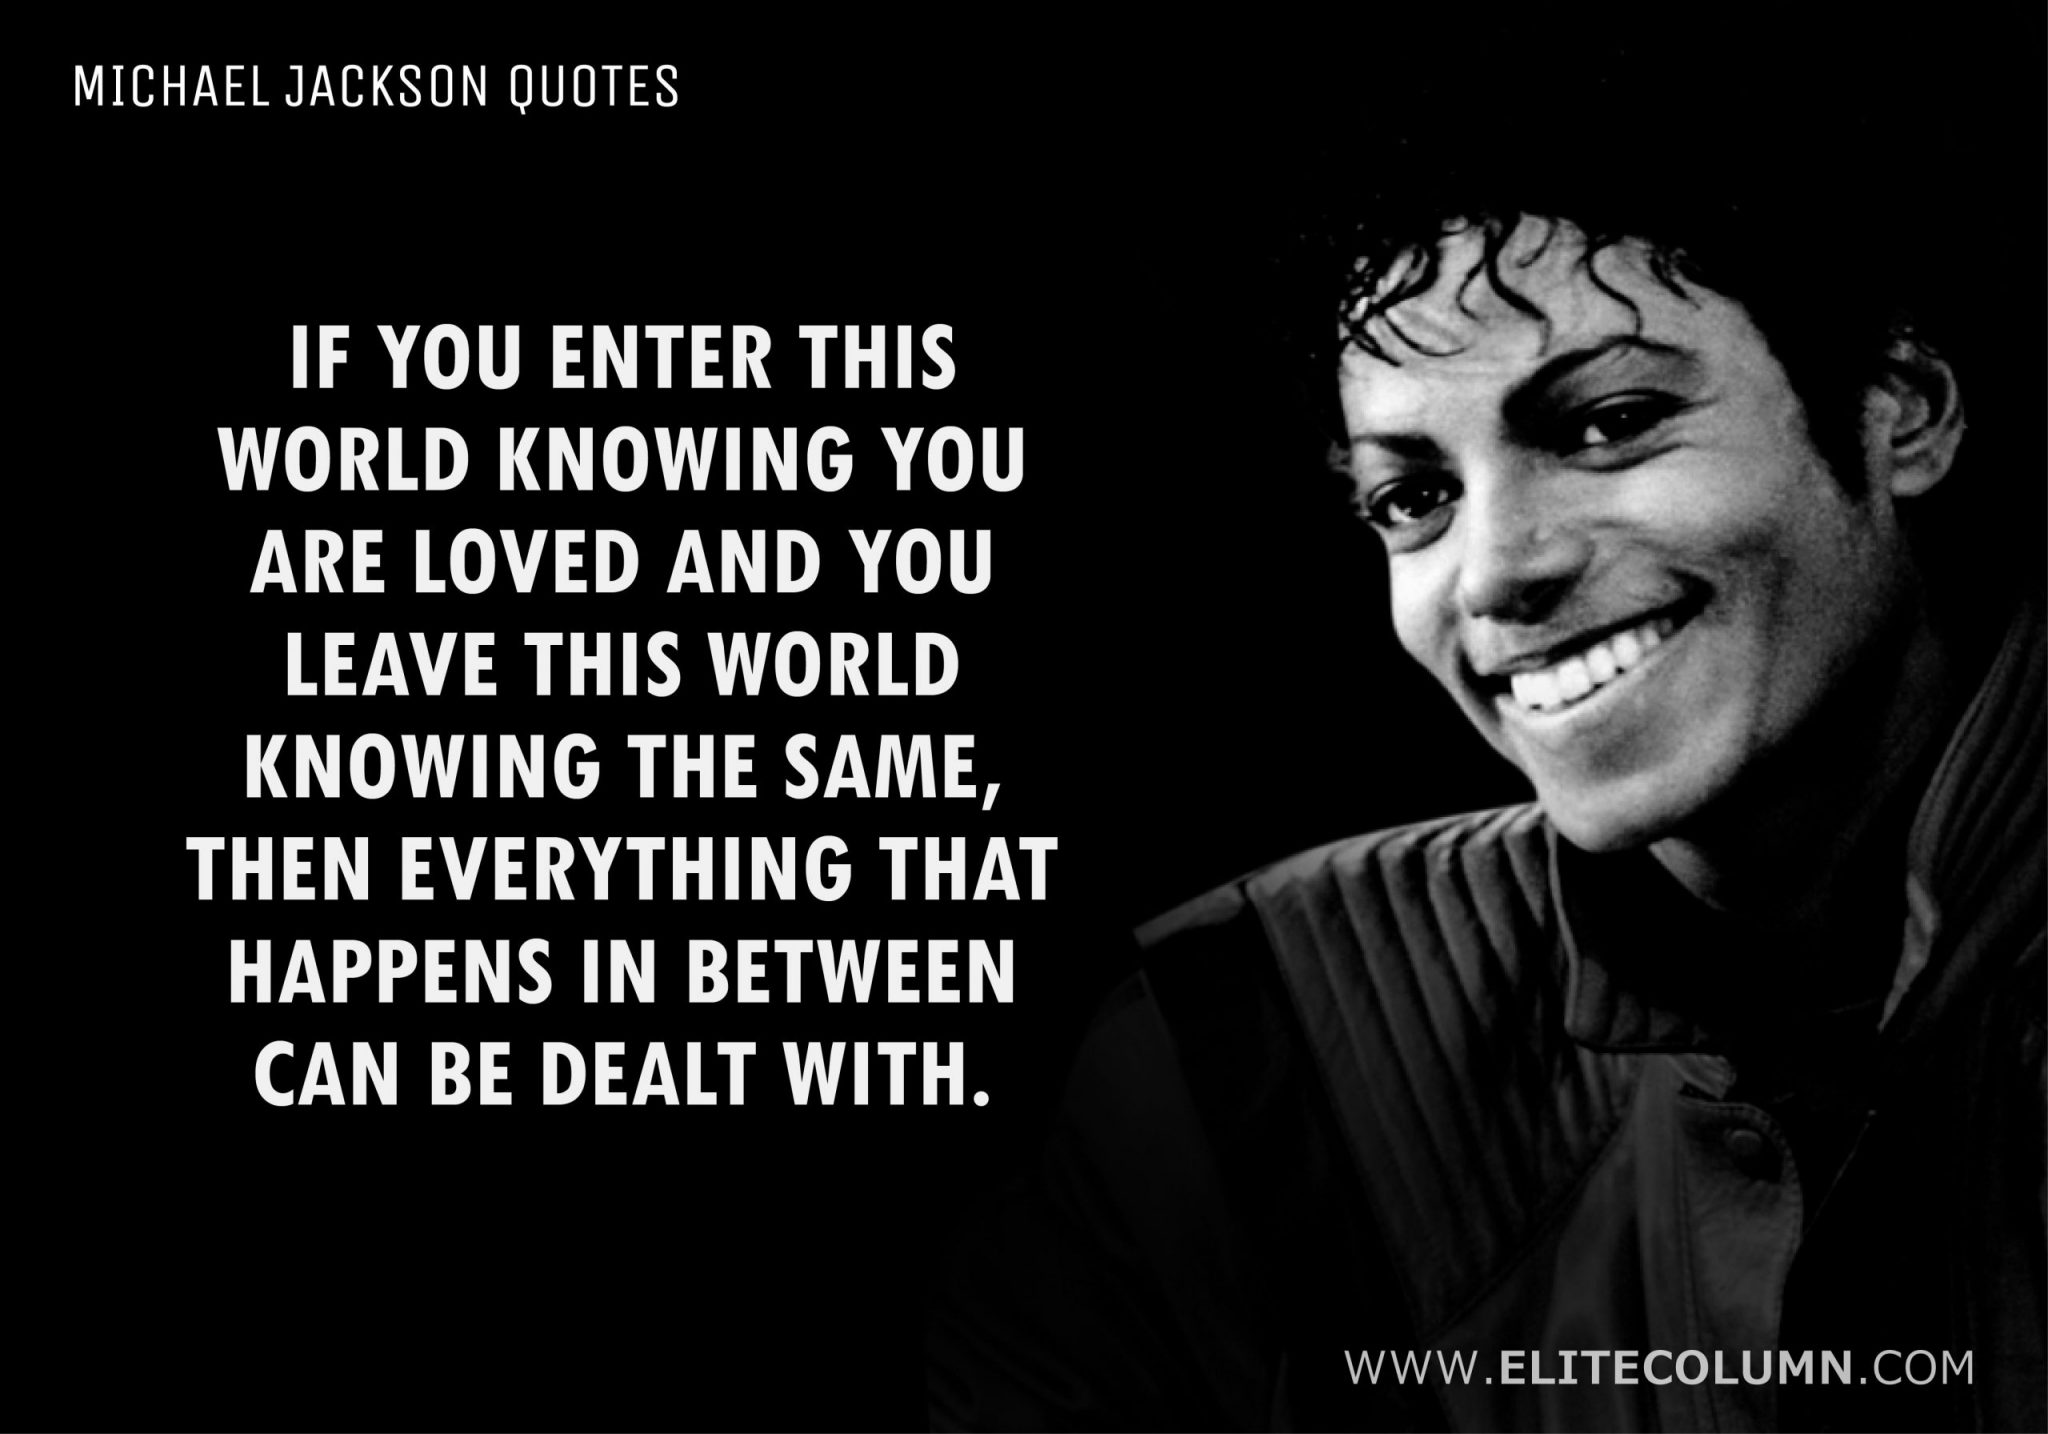 Michael Jackson Quotes (3)